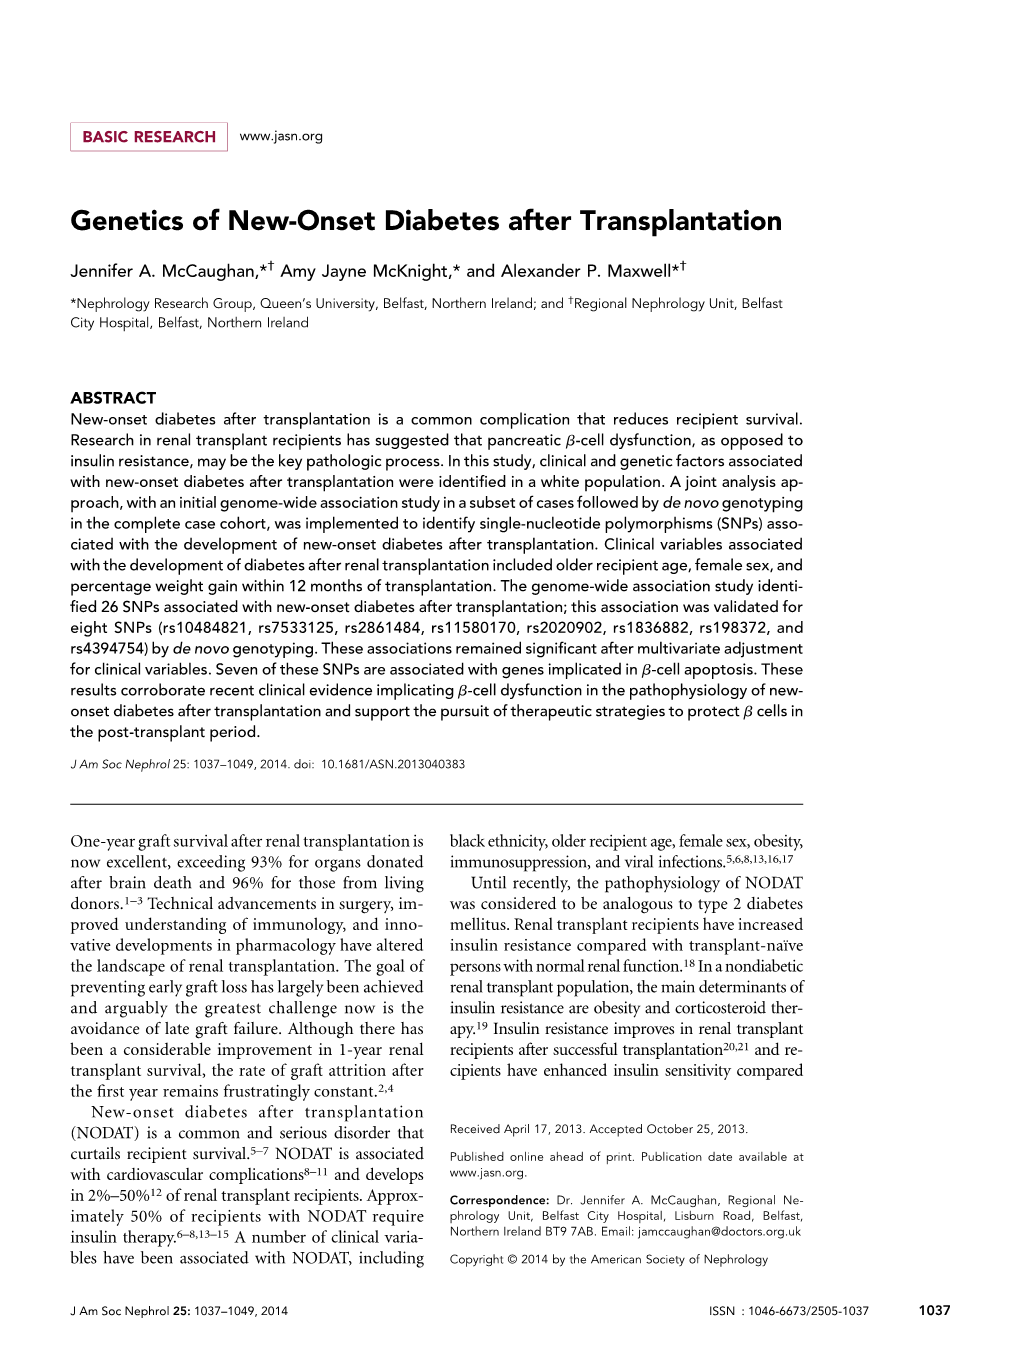 Genetics of New-Onset Diabetes After Transplantation